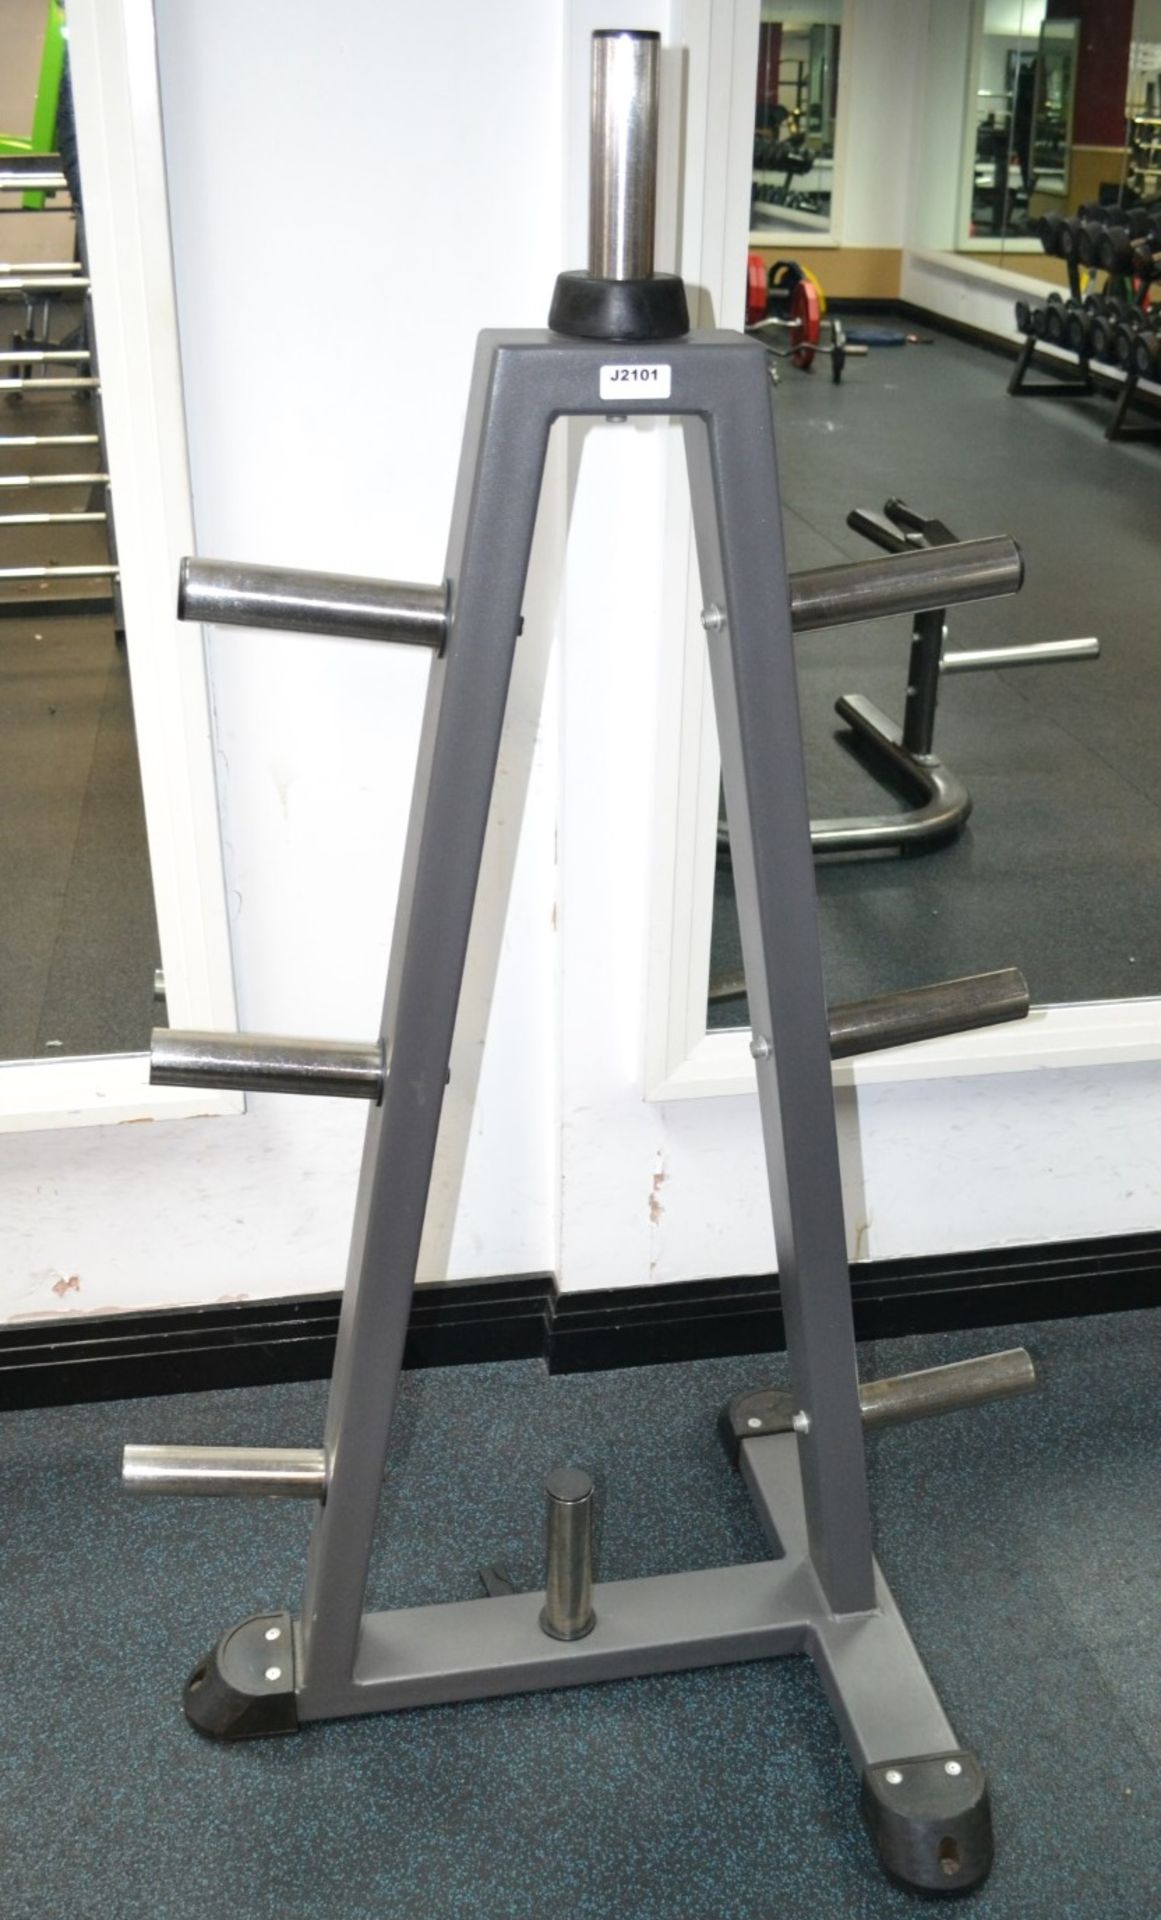 1 x Weights Tree Gym Equipment - Dimensions: H160 x L80 x W60cm - Ref: J2101/GFG - CL356 - Location: